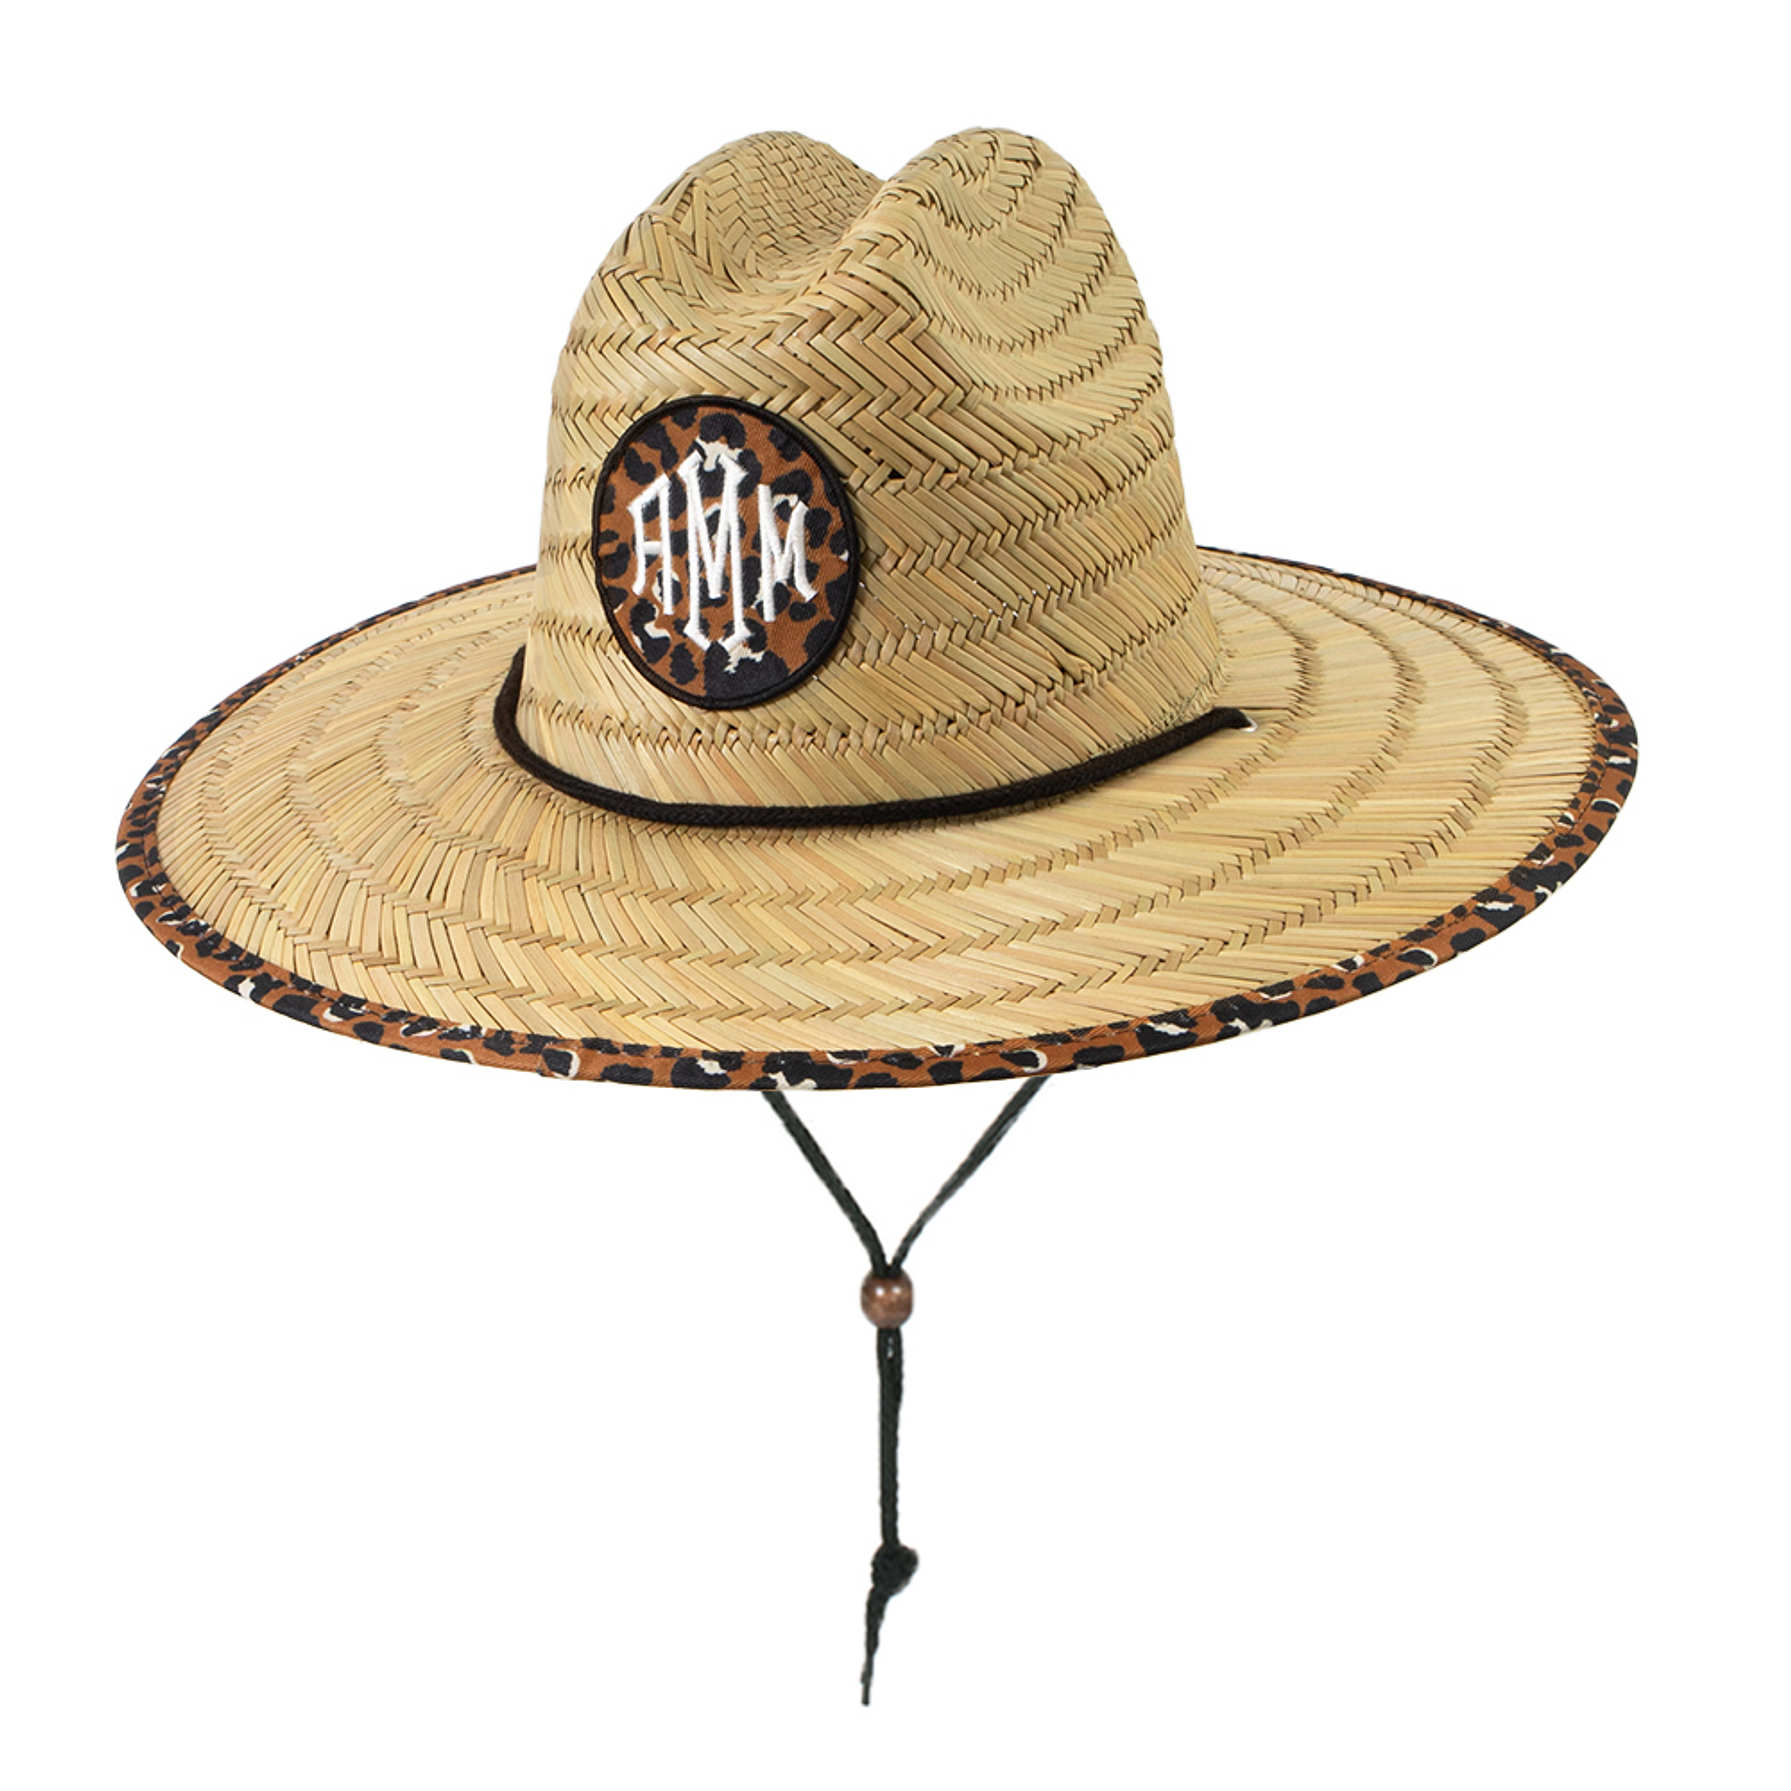 Monogrammed Straw Hat - Personalized Straw Hat